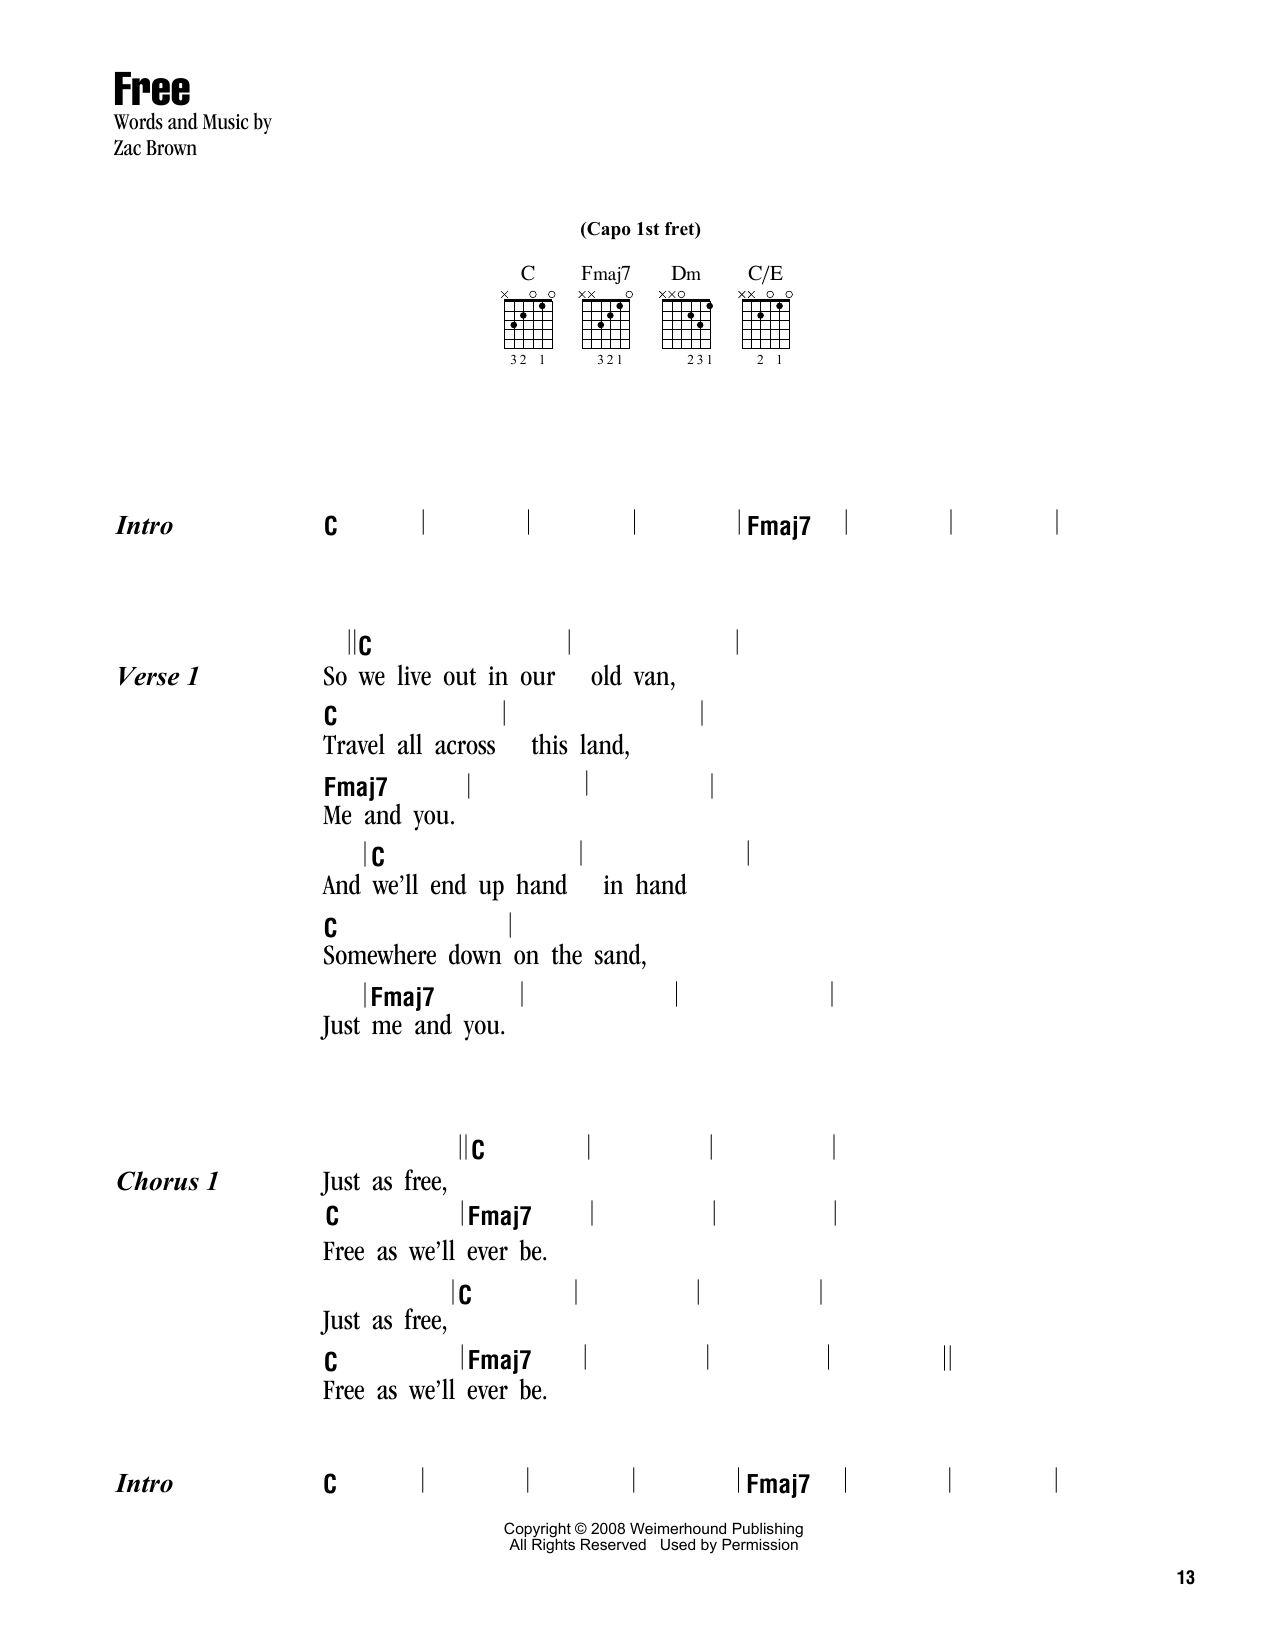 Colder Weather Chords Sheet Music Digital Files To Print Licensed Zac Brown Digital